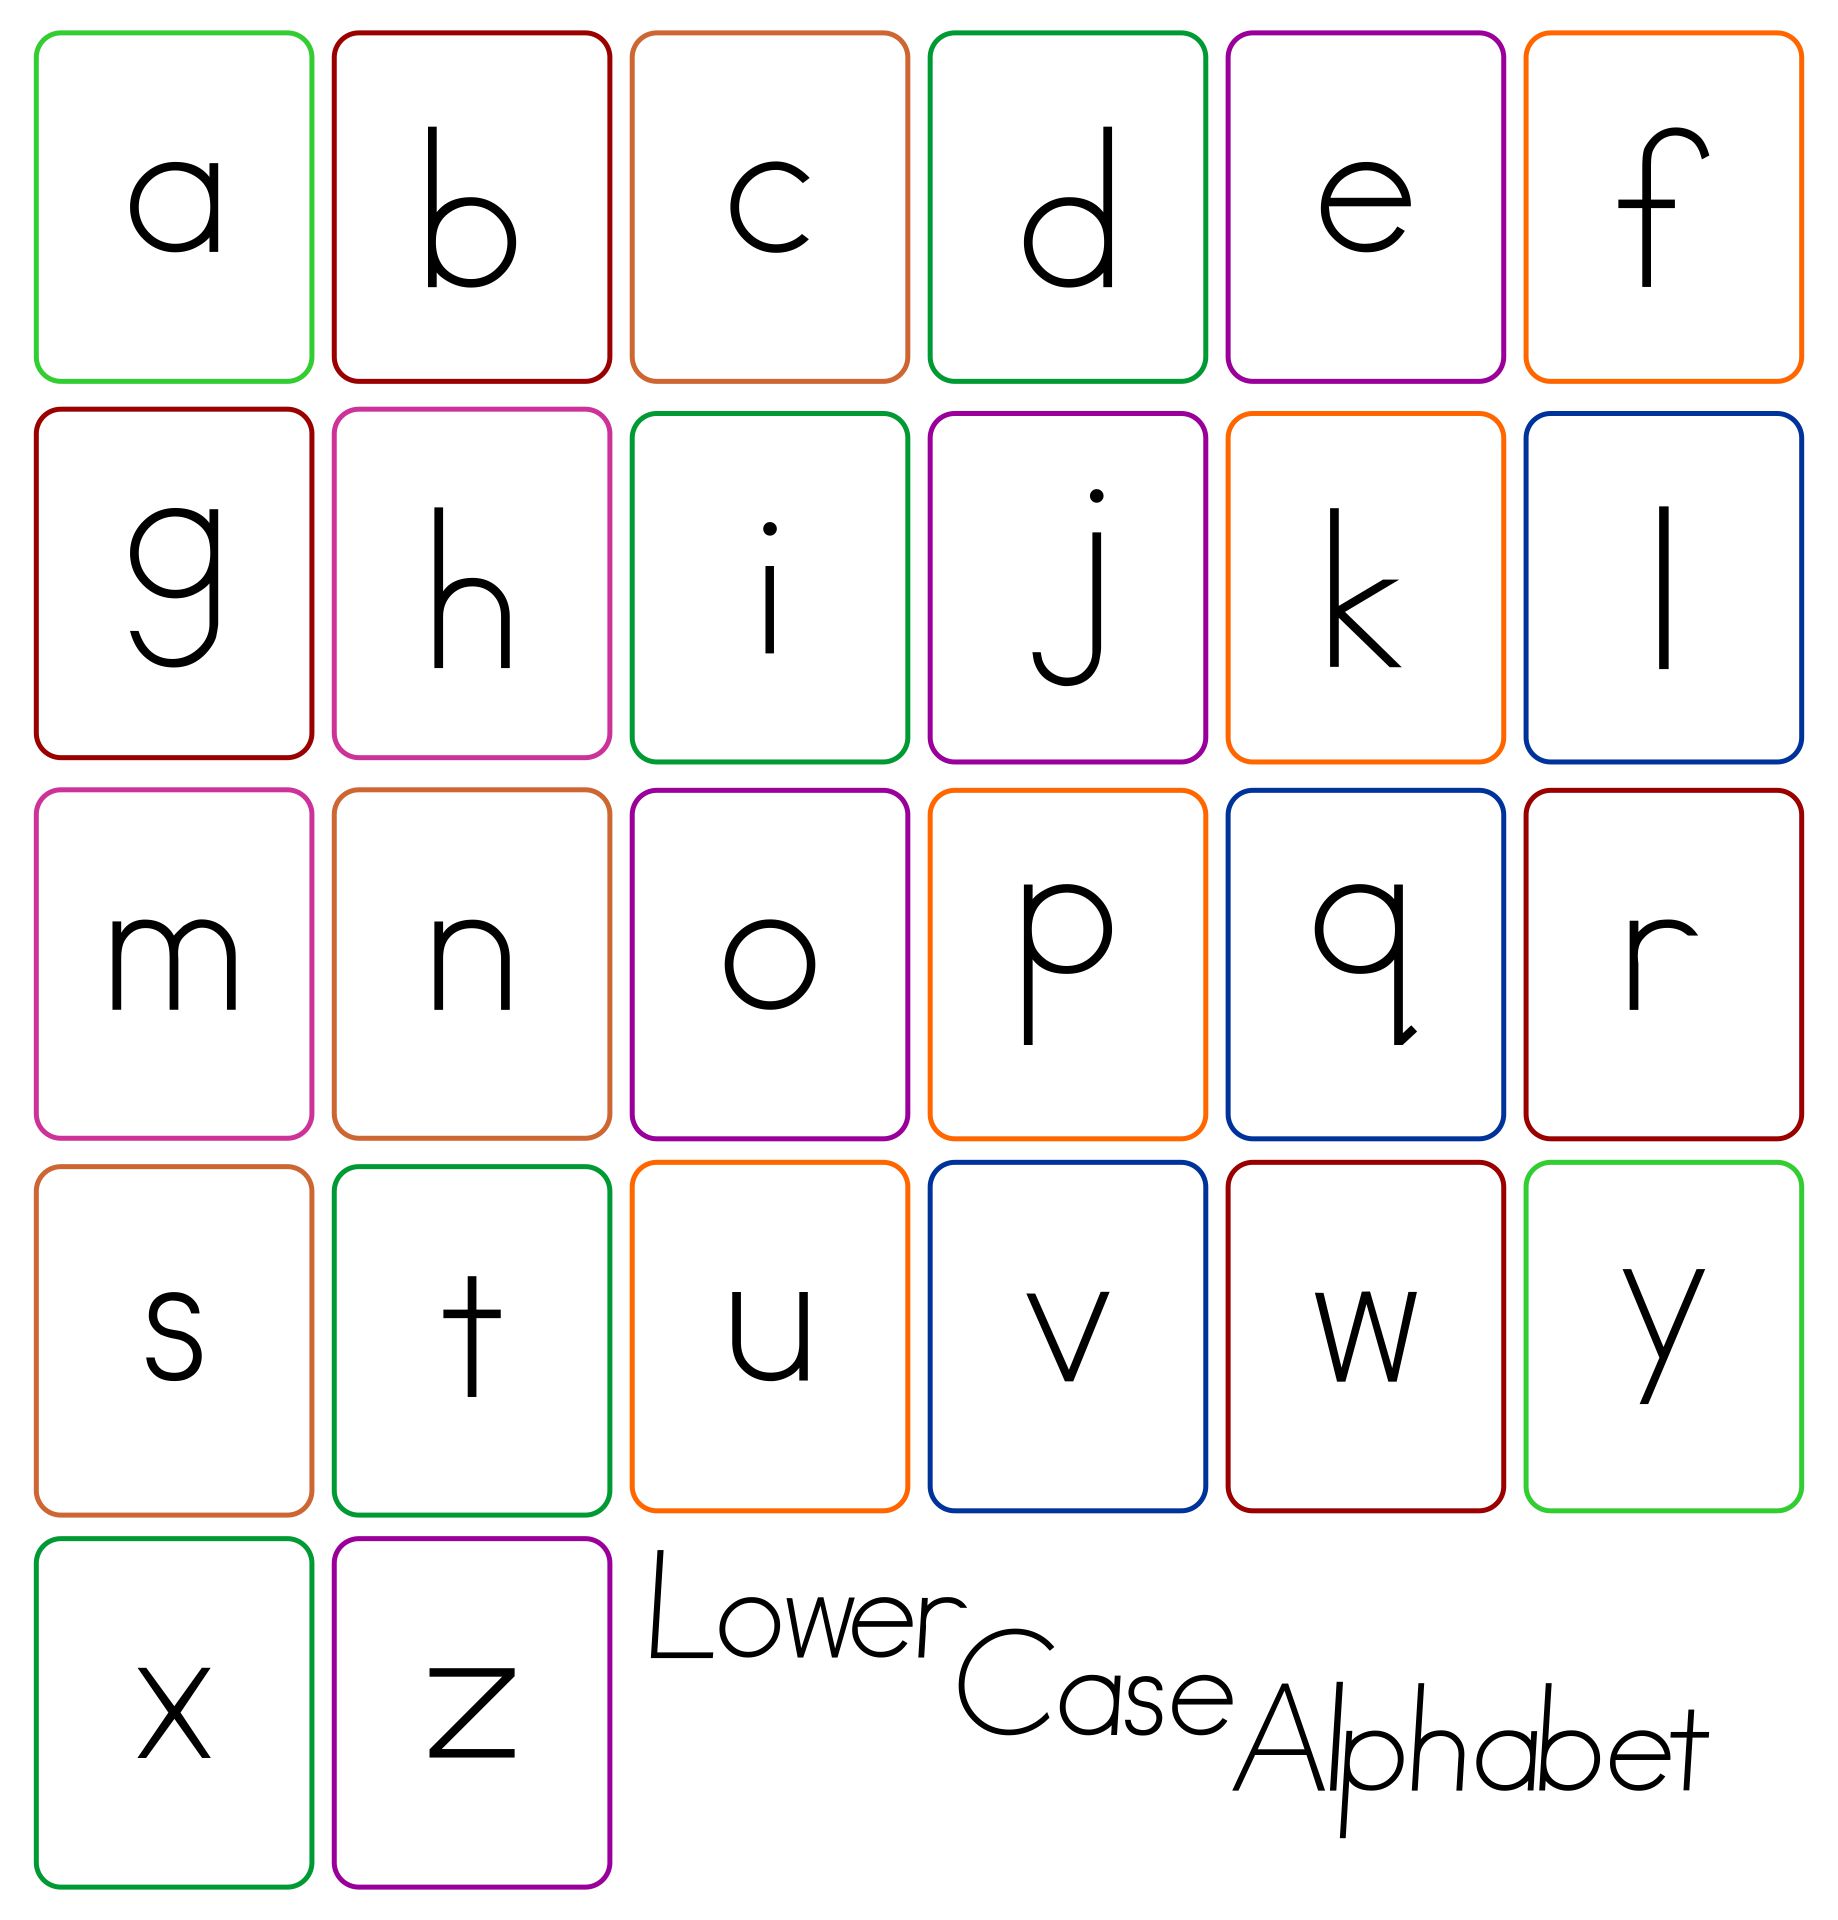 Free Lower Case Alphabet Flash Cards